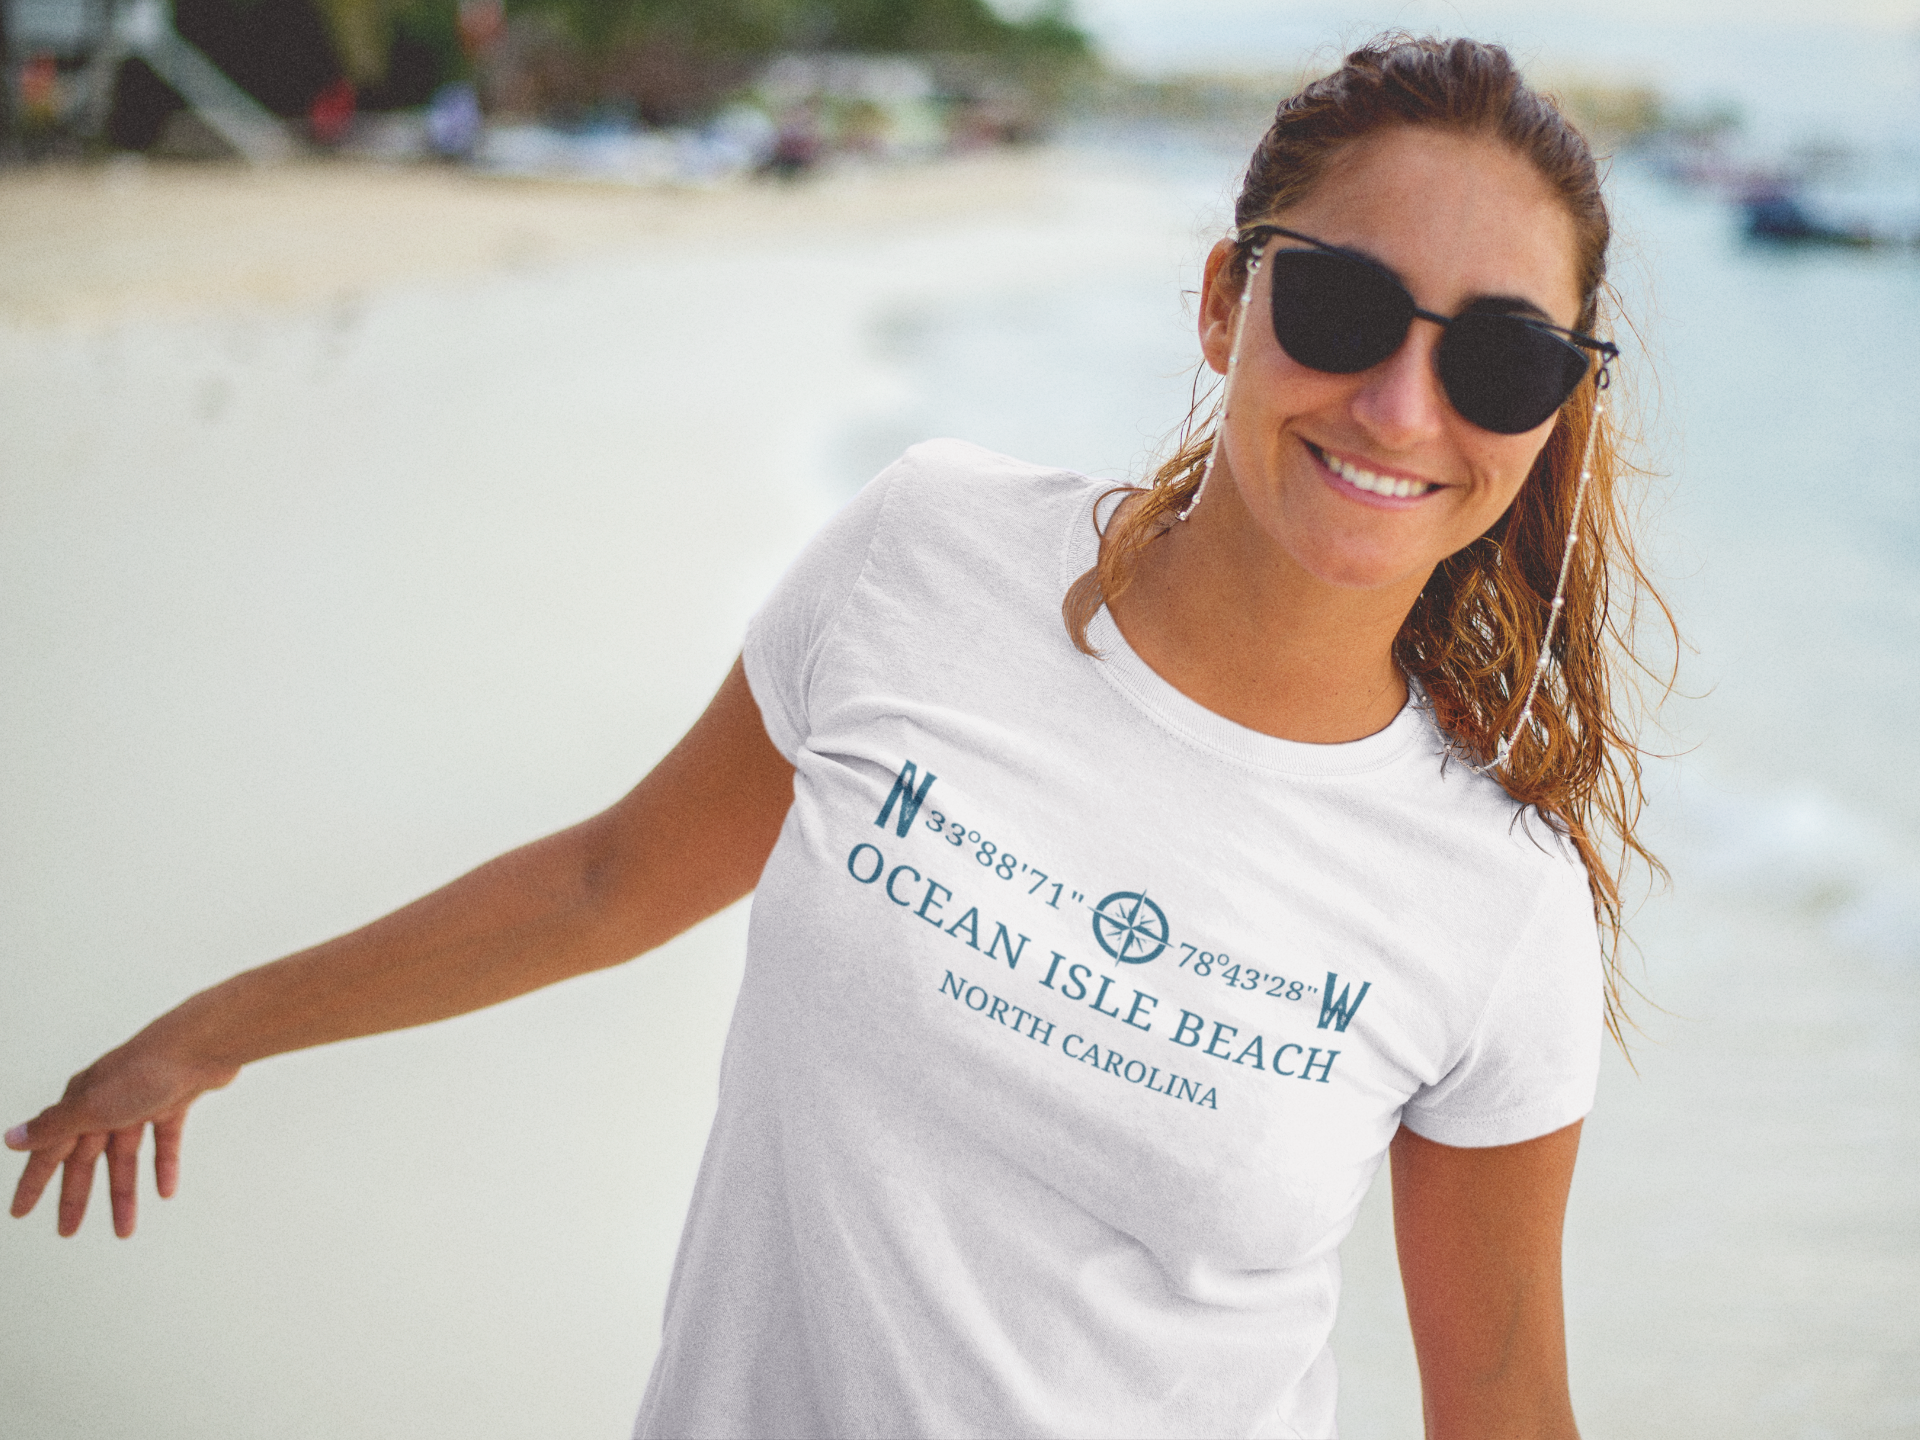 Ocean Isle Beach Longitude and Latitude Beach T-Shirt (With Free